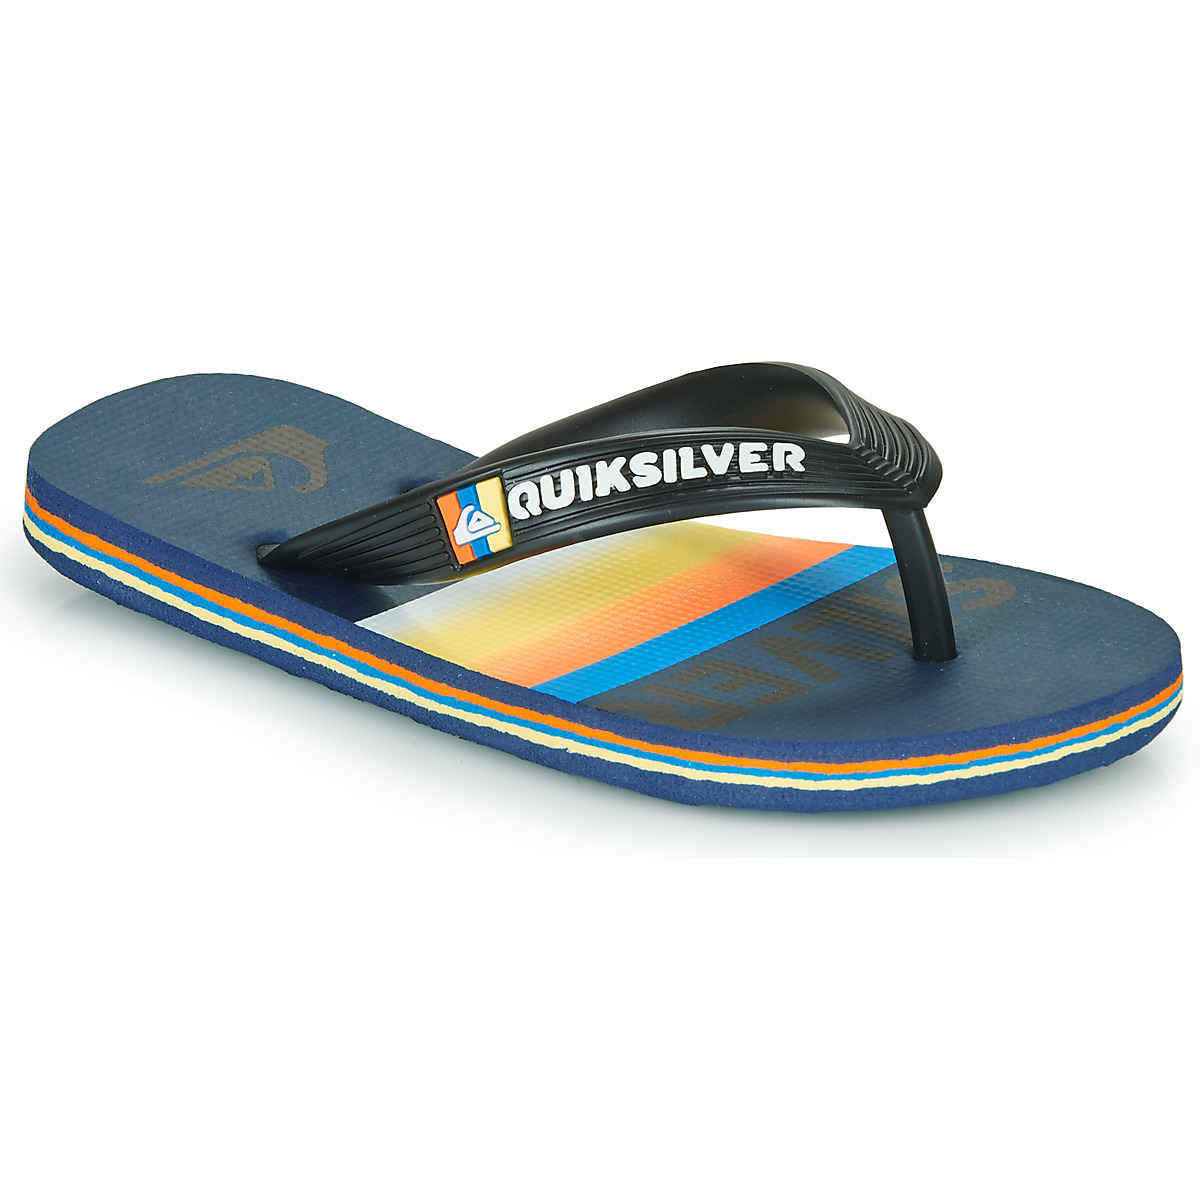 quiksilver  molokai slab  boys's children's flip flops / sandals in blue